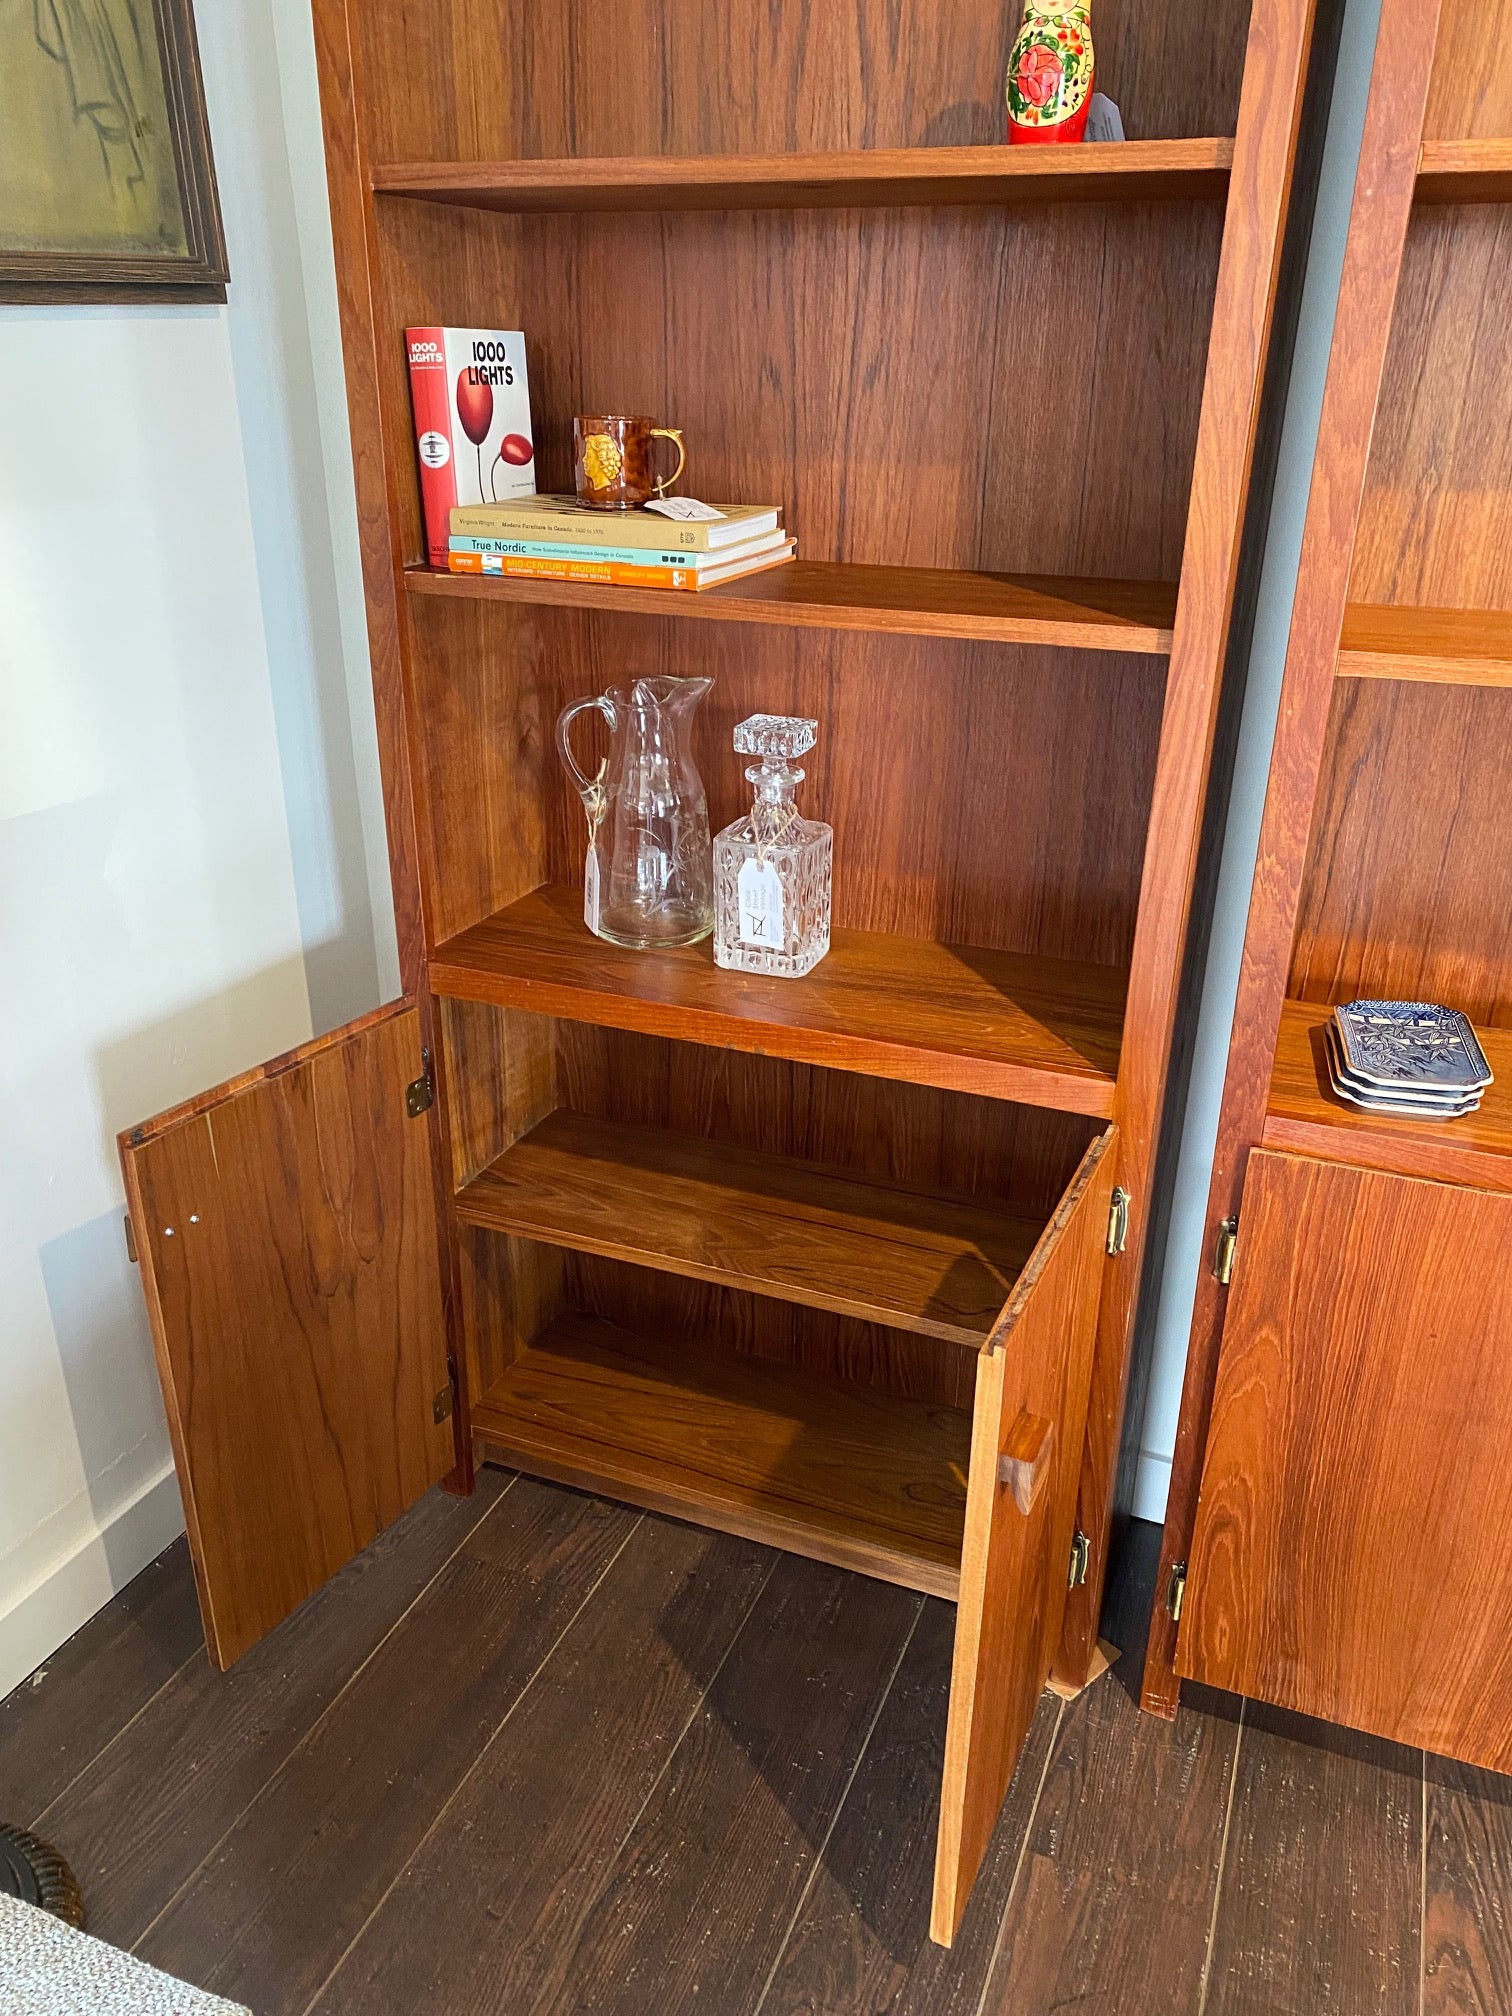 Bottom cabinet with open doors showing shelf of vintage teak shelf- Cook Street Vintage